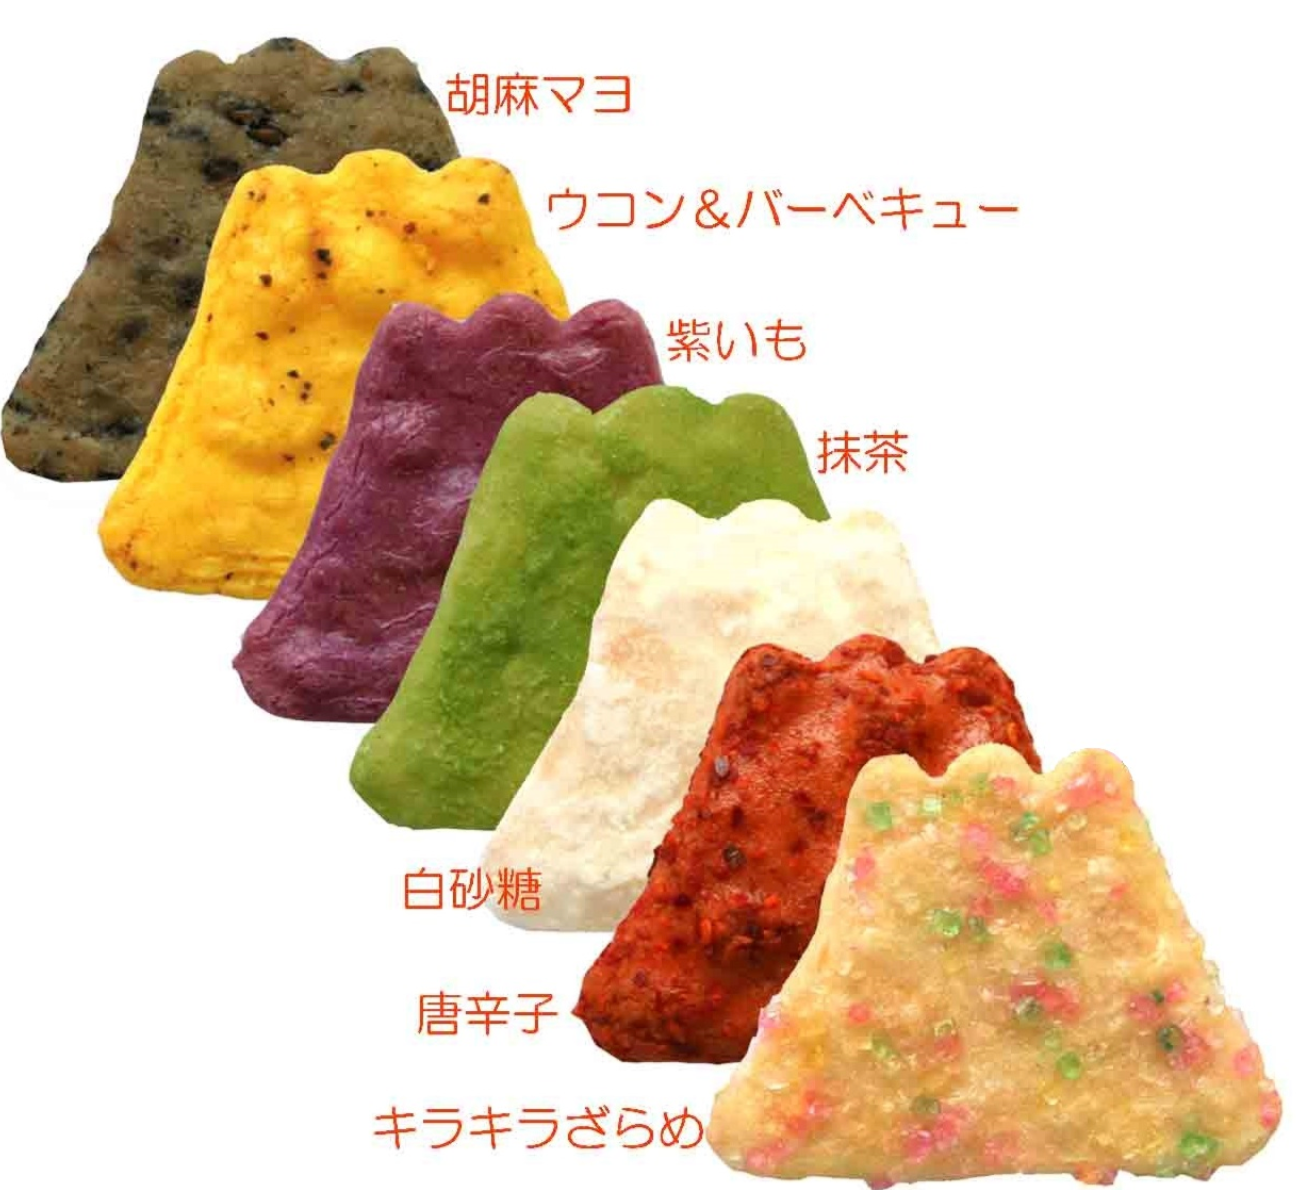 Mt.FUJI shaped rice cracker 7 flavors X 10 packs Made in Japan